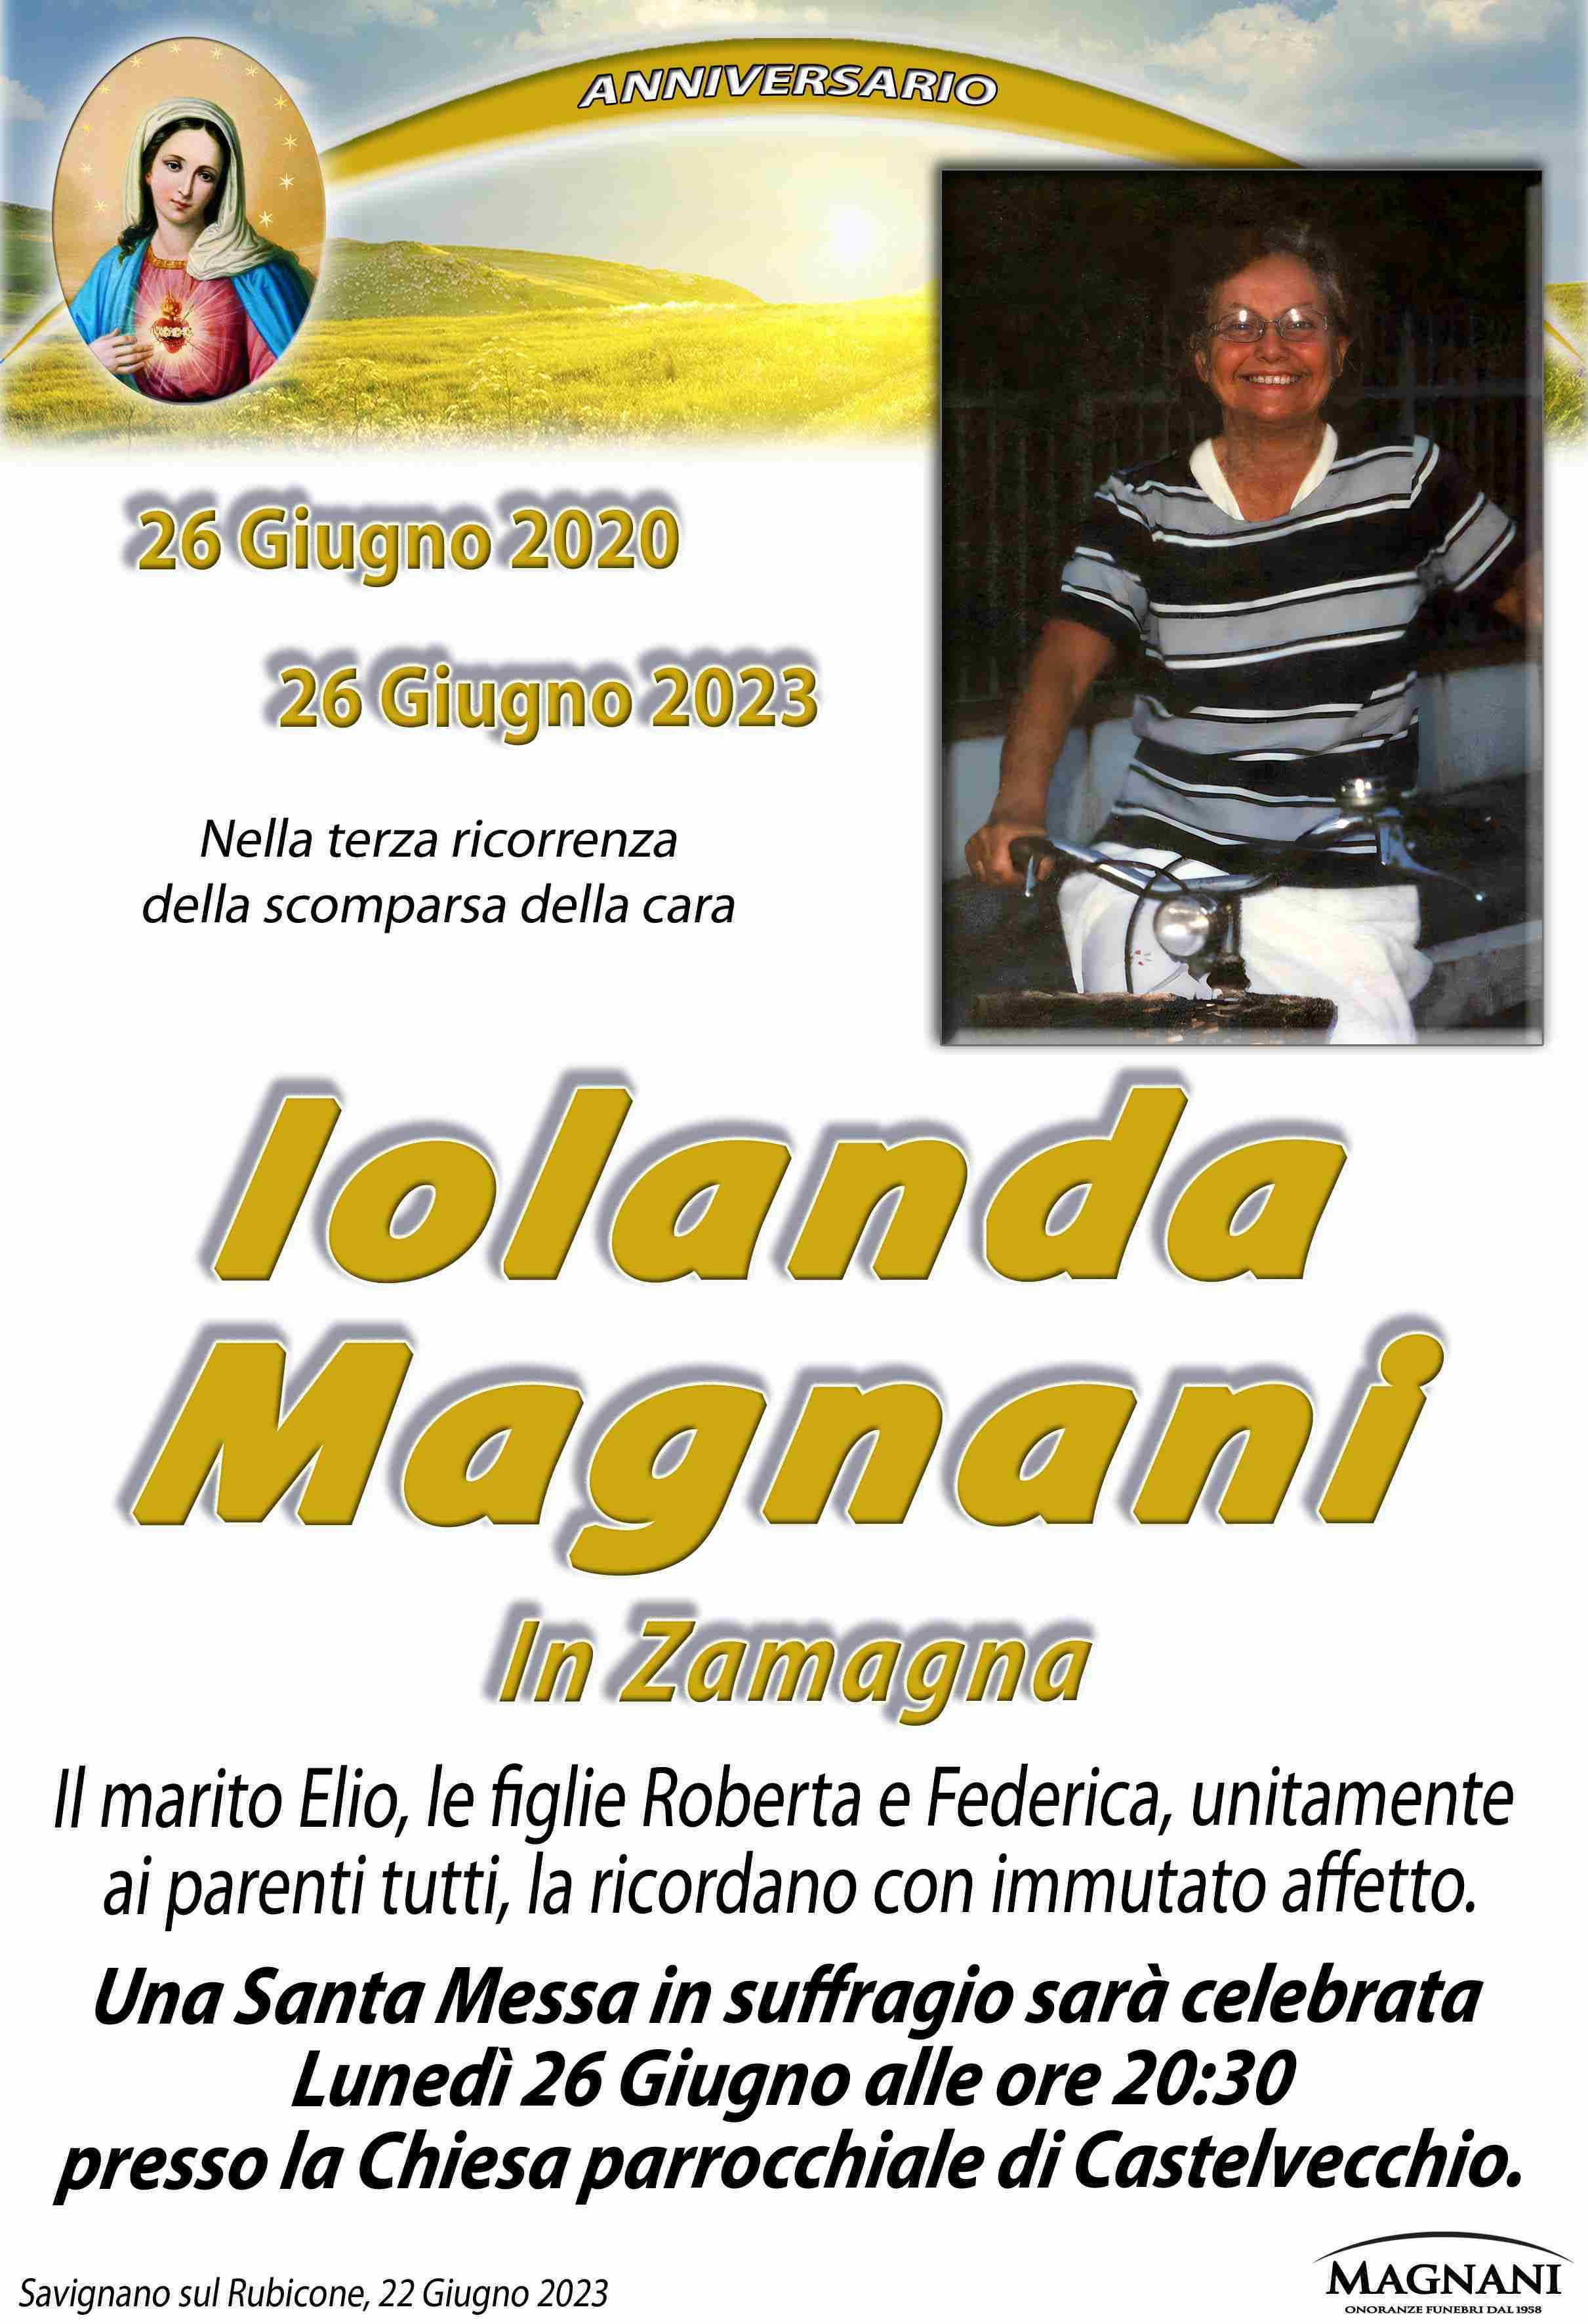 Iolanda Magnani